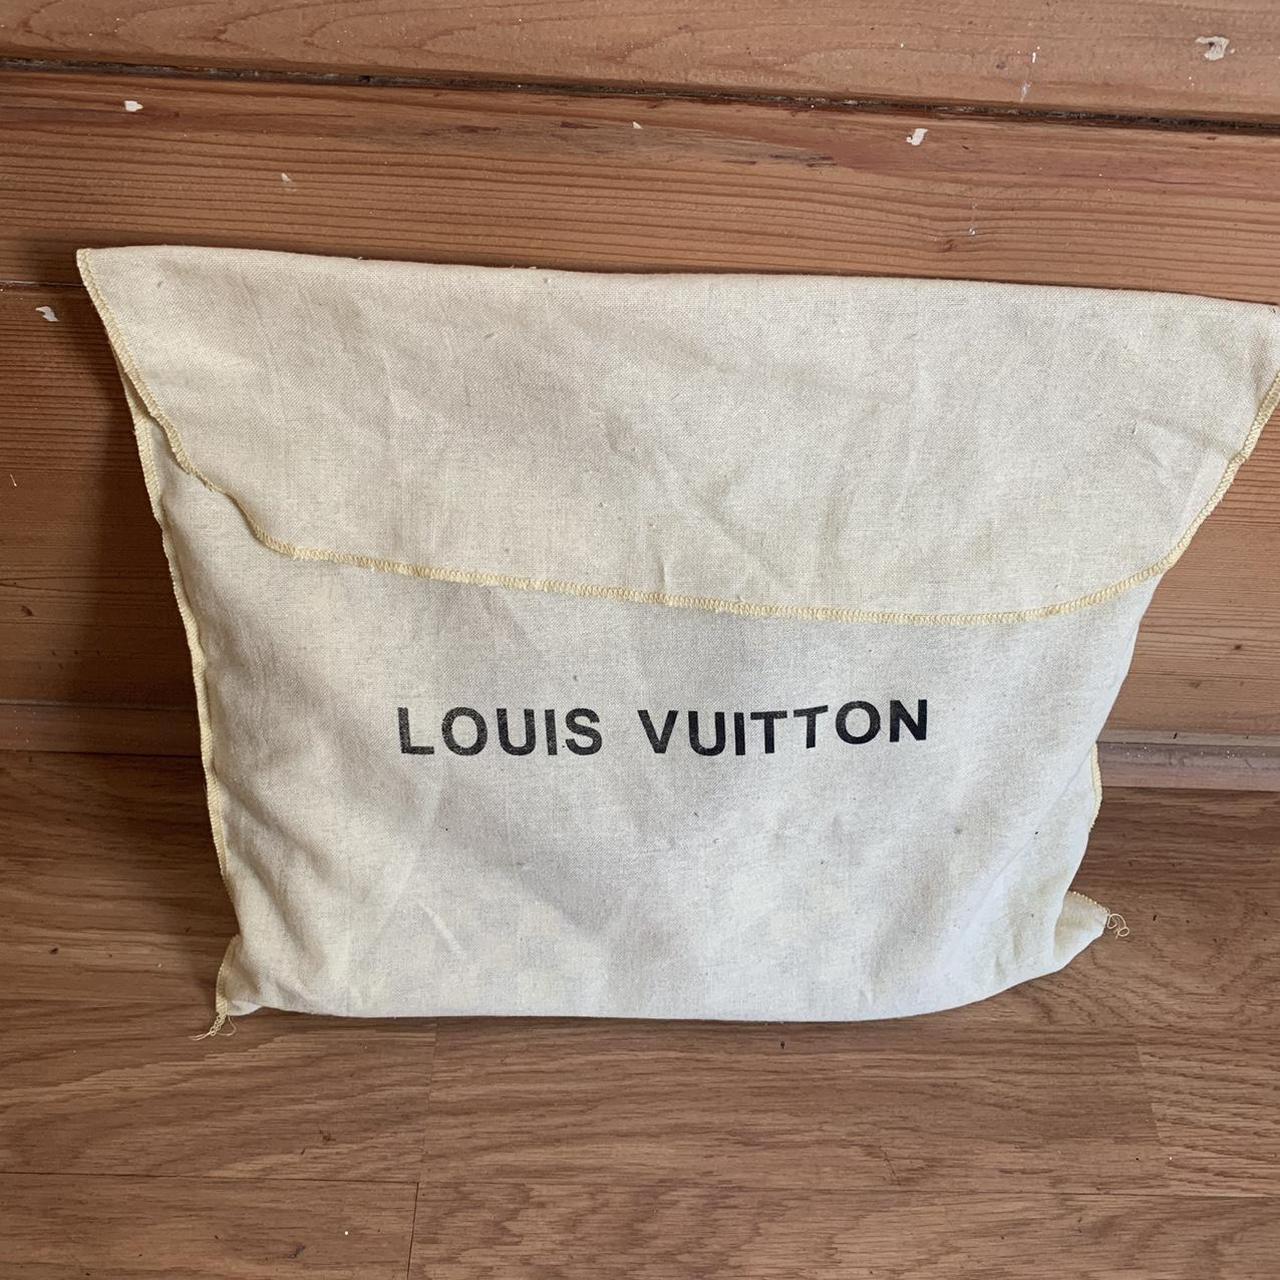 Louis Vuitton Speedy B30 With dust bag and receipt - Depop